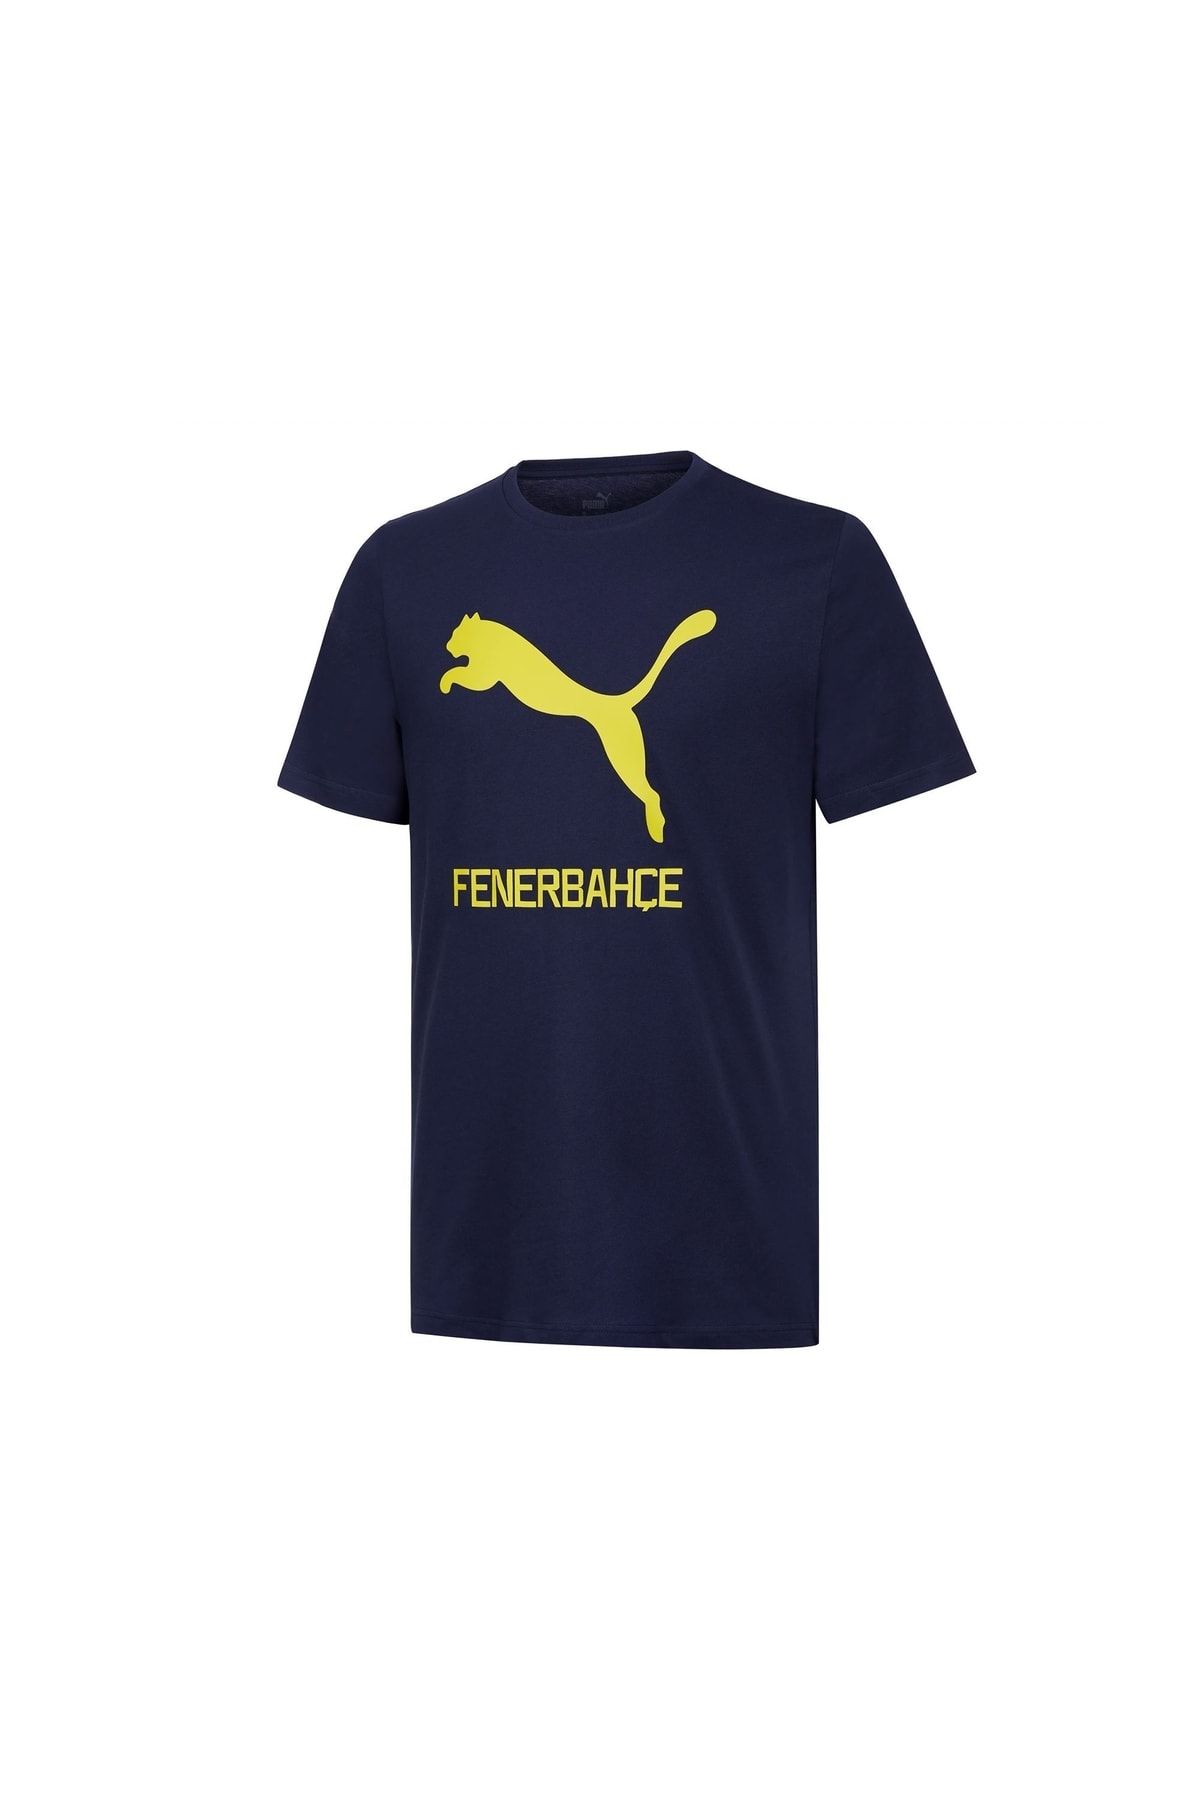 Puma Fenerbahçe Cat Tee Erkek Fenerbahçe Futbol  T-Shirt 77313601 Lacivert